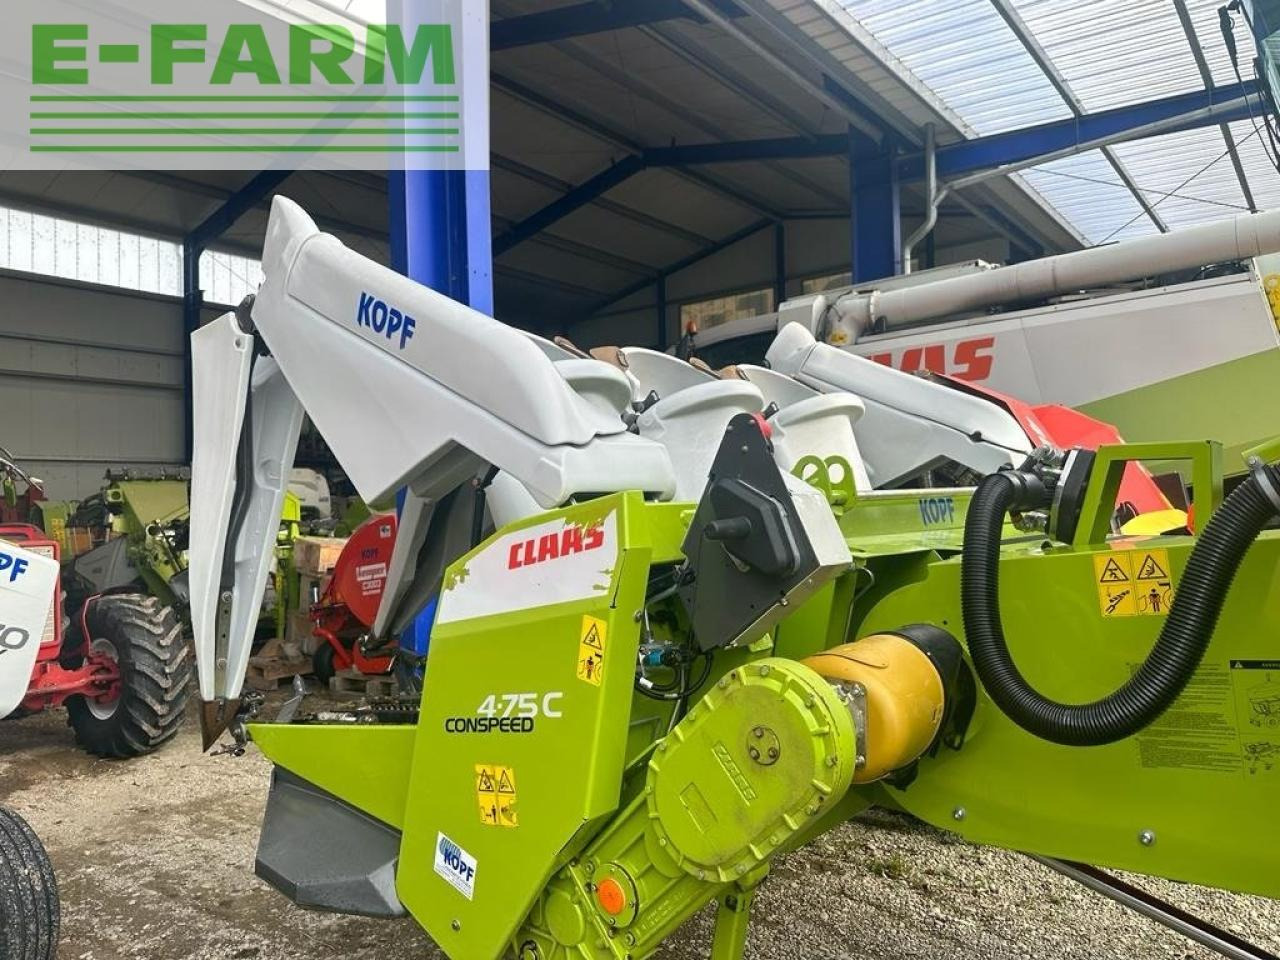 Farm tractor CLAAS conspeed 4-75 c linear